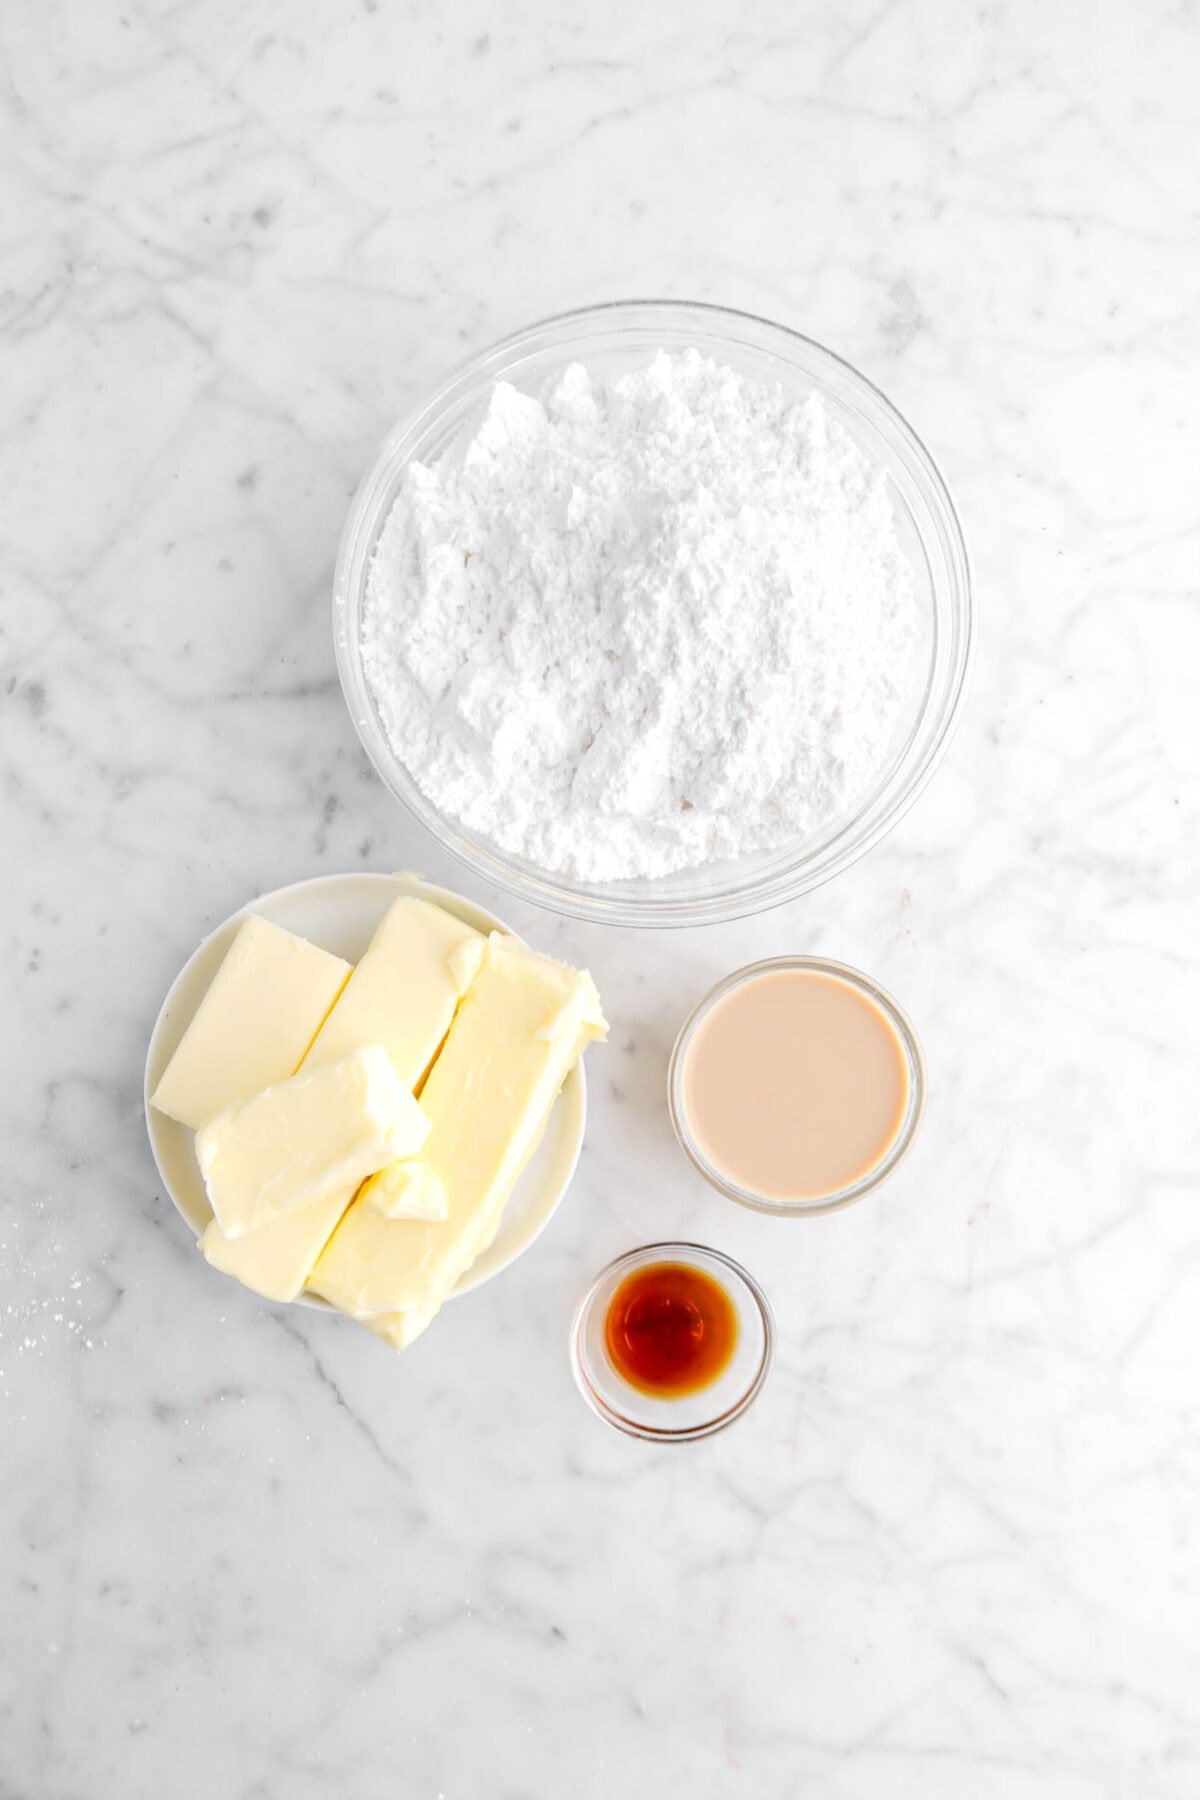 powdered sugar, butter, irish cream, and vanilla on marble surface